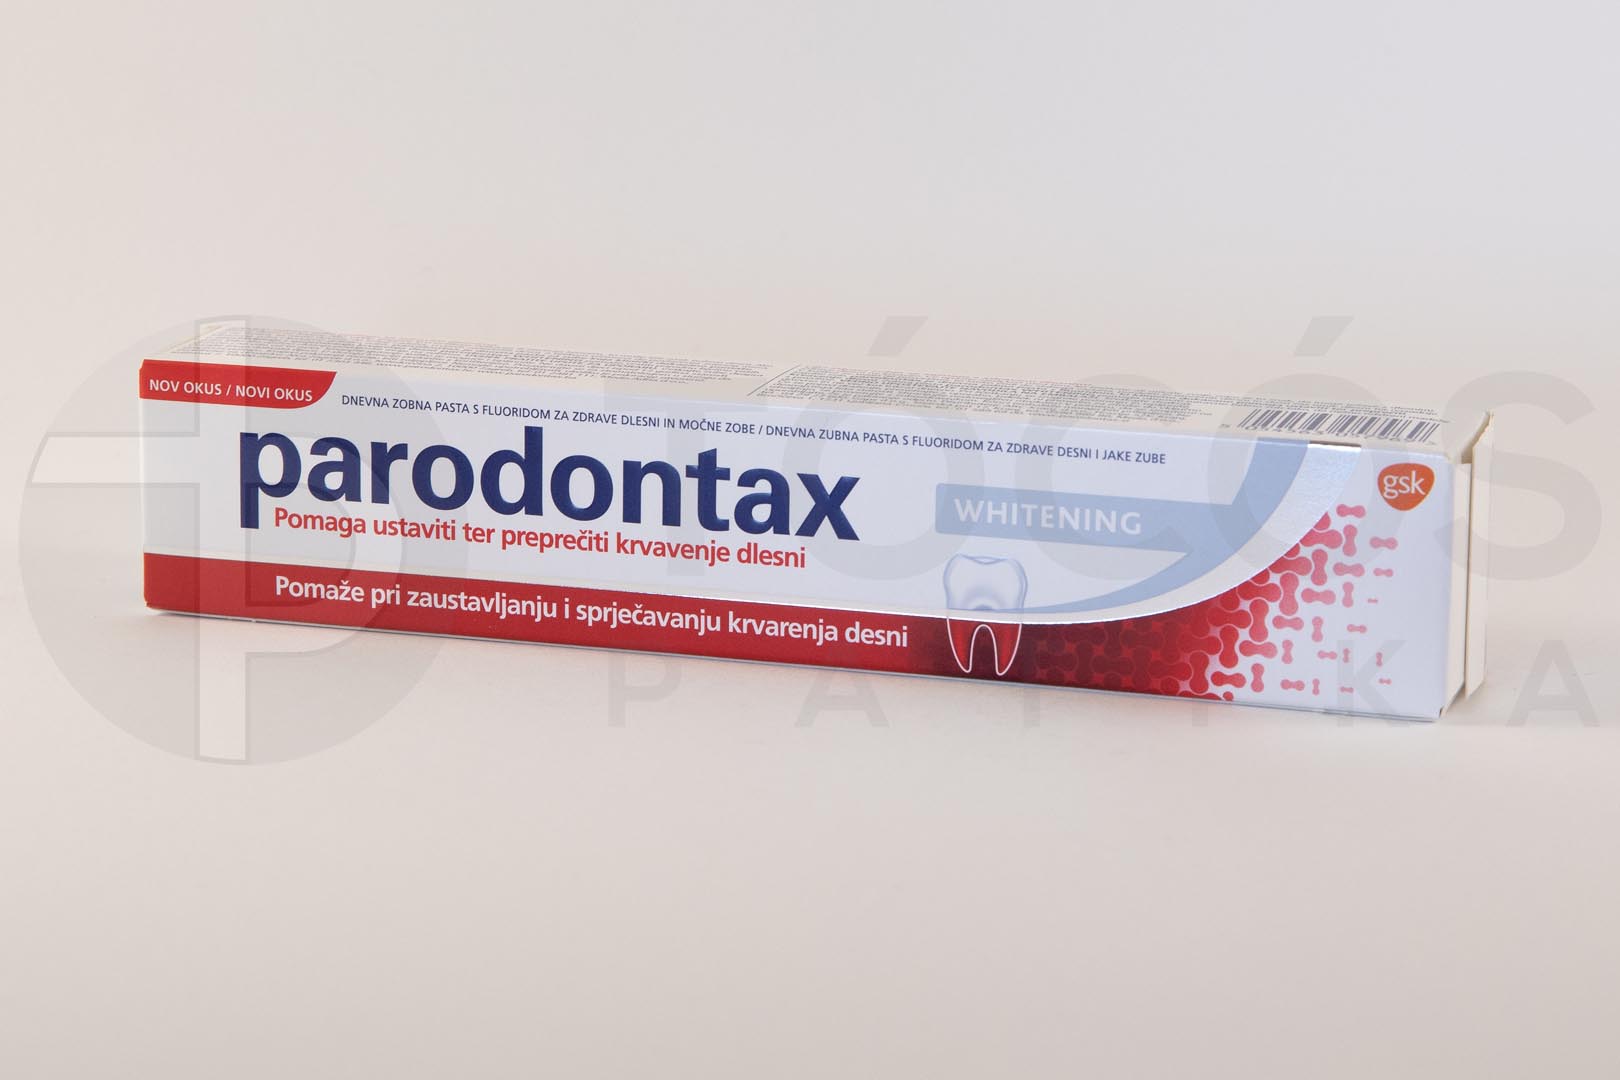 Parodontax fogkrém Whitening 75ml